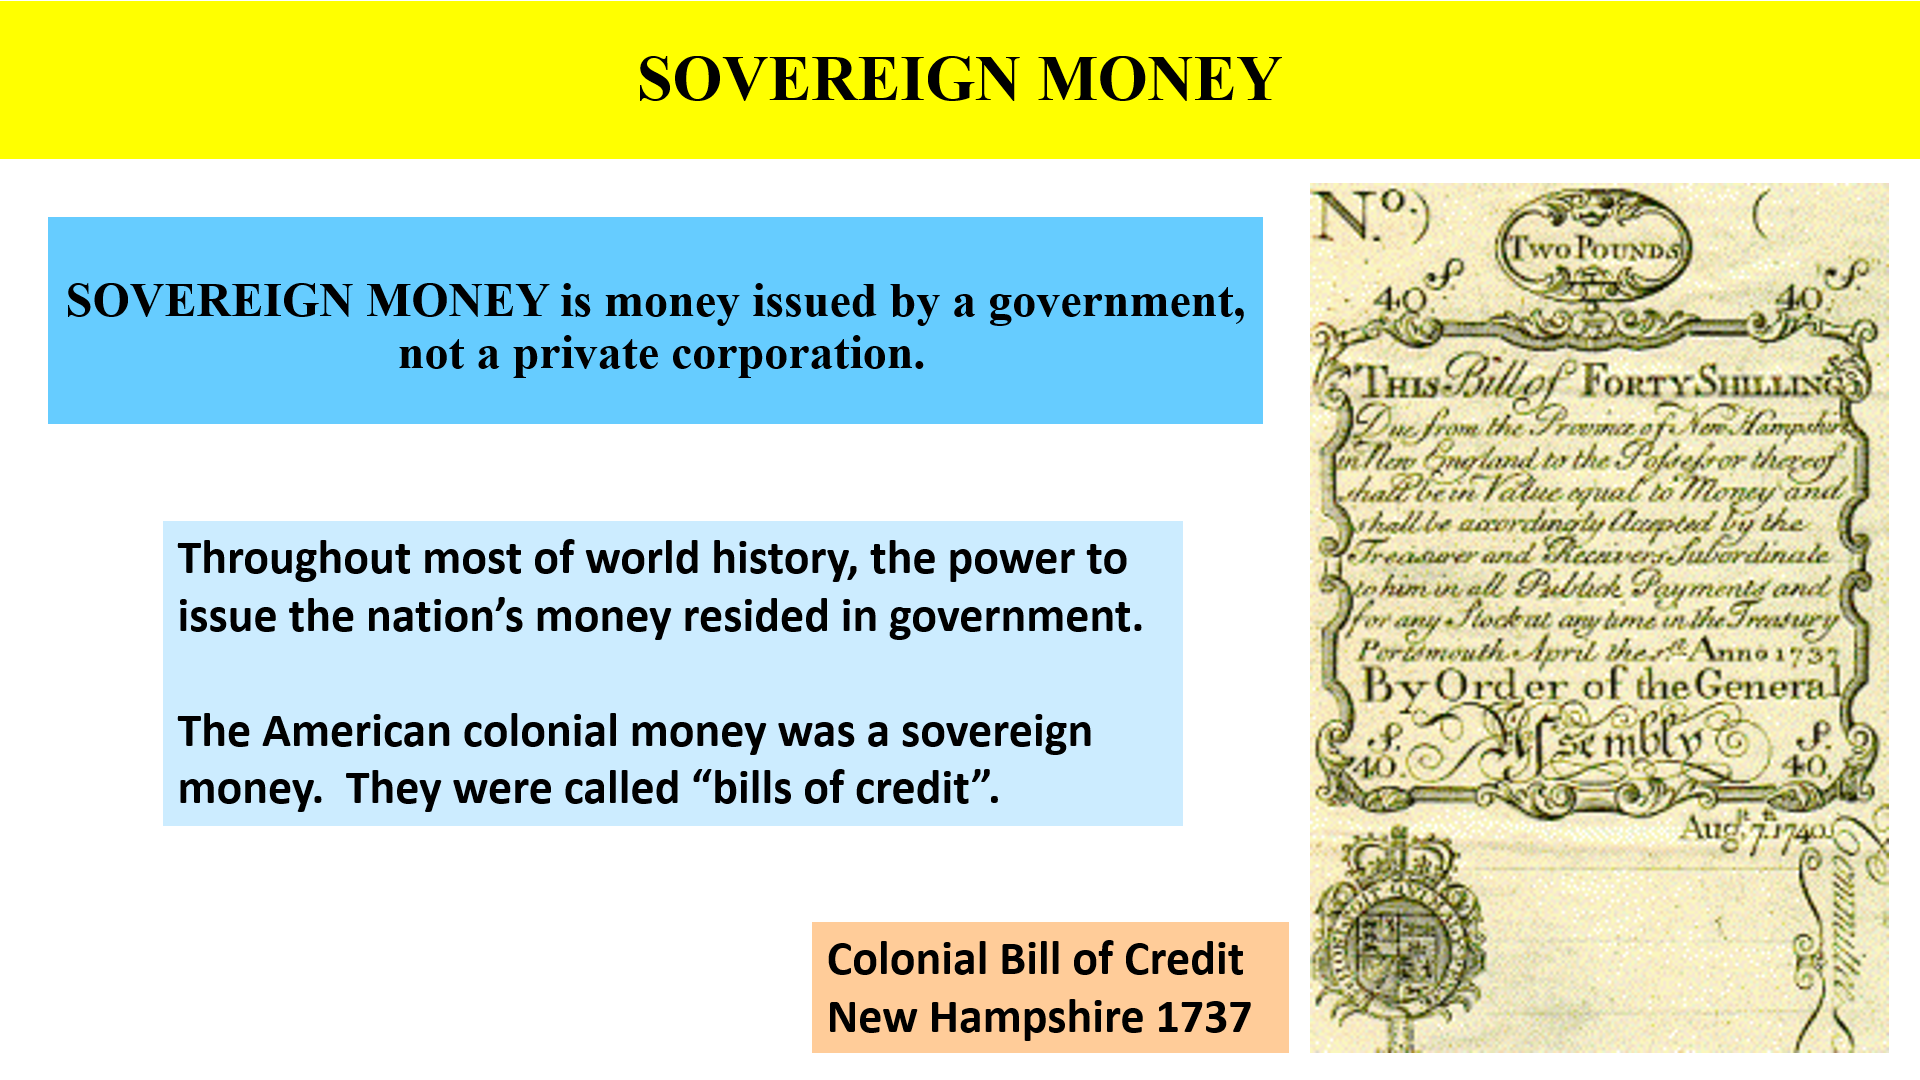 Part 3: Sovereign Money